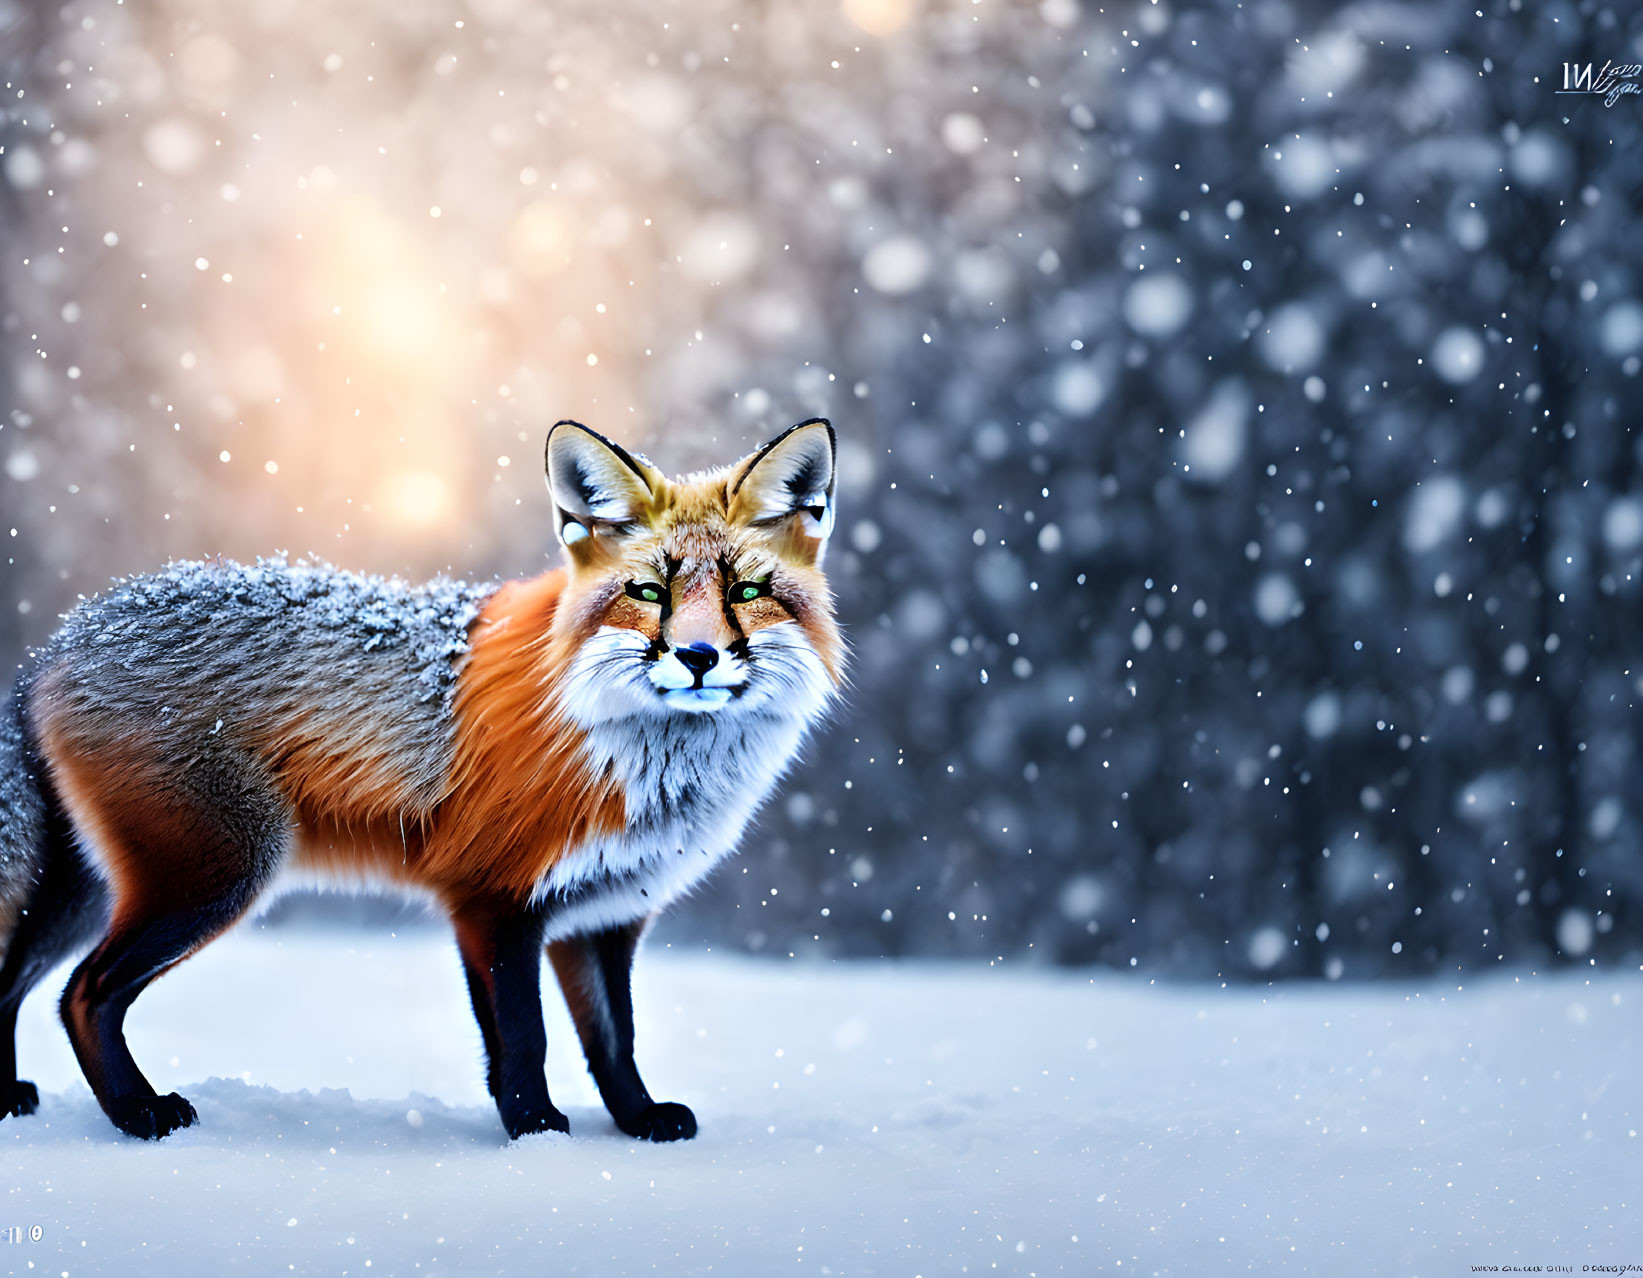 Snowy The Fox